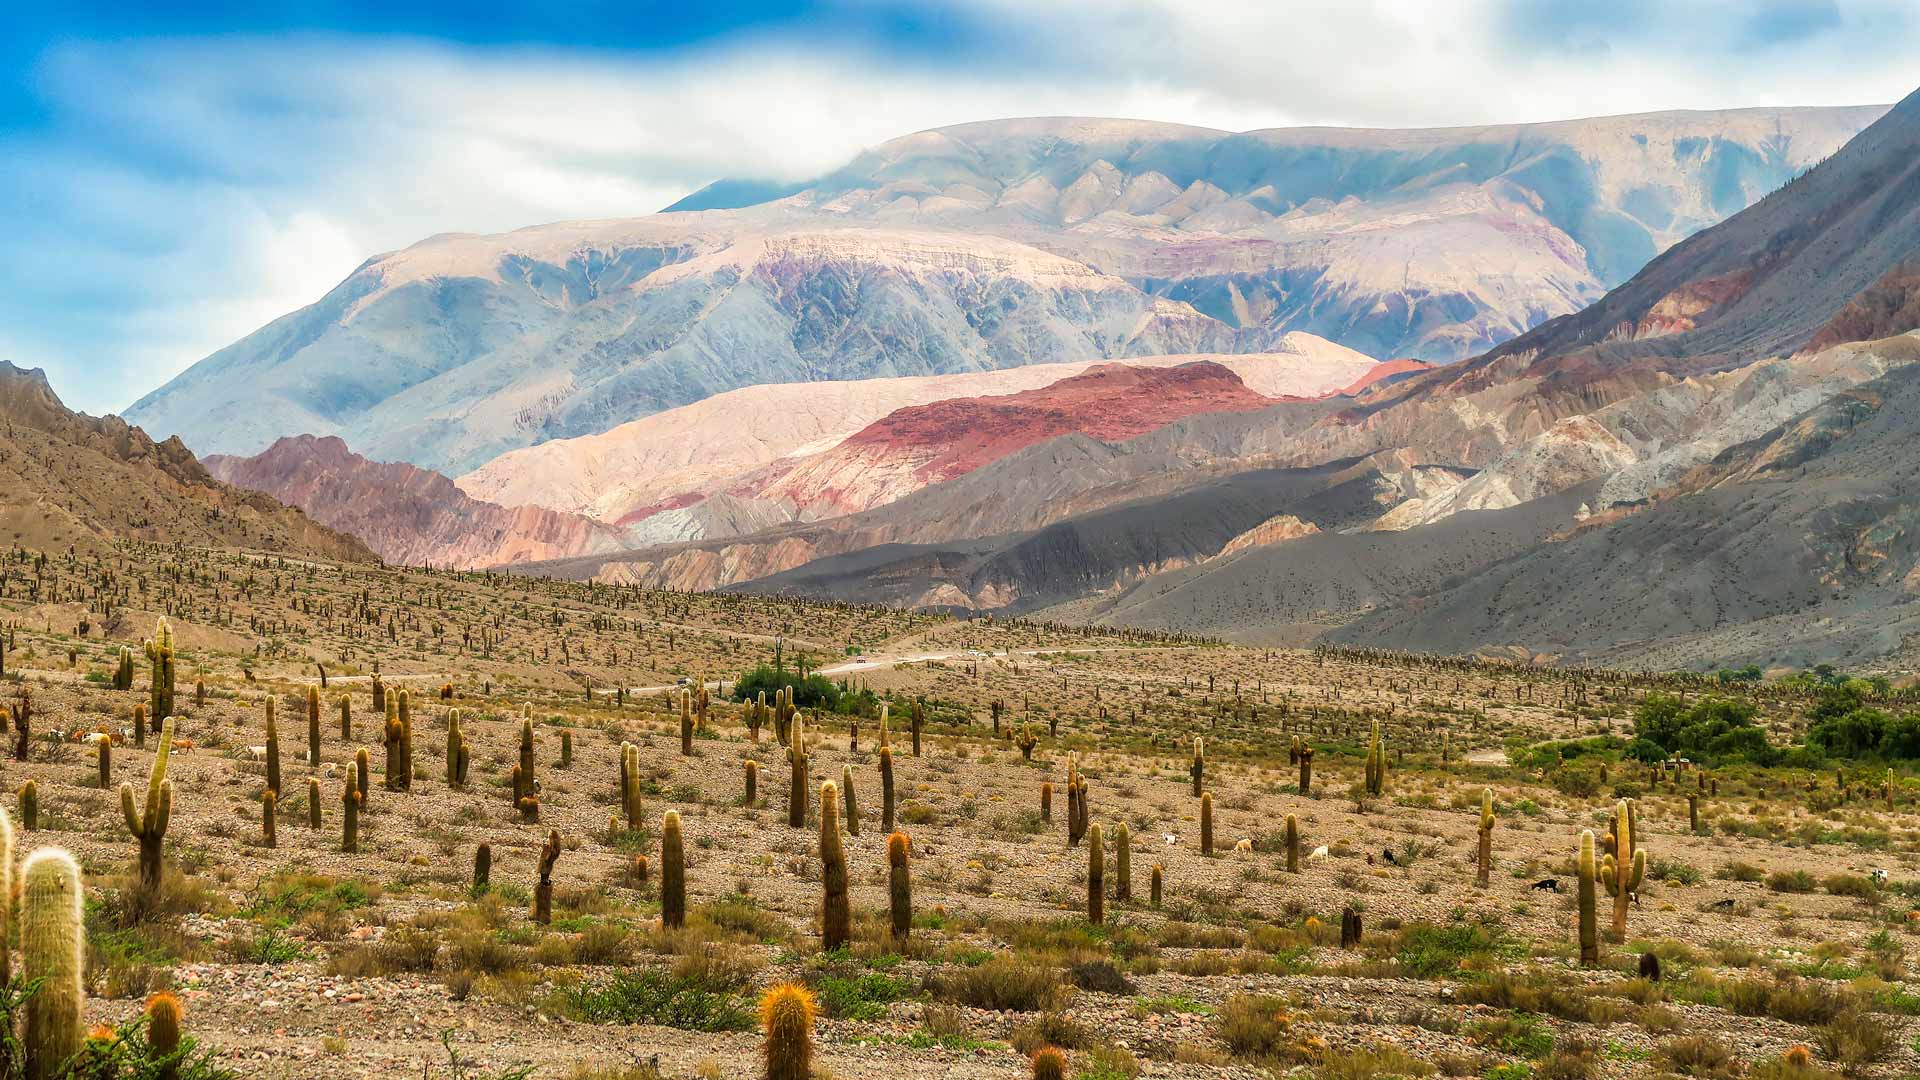 Argentine et Chili, terres des Andes